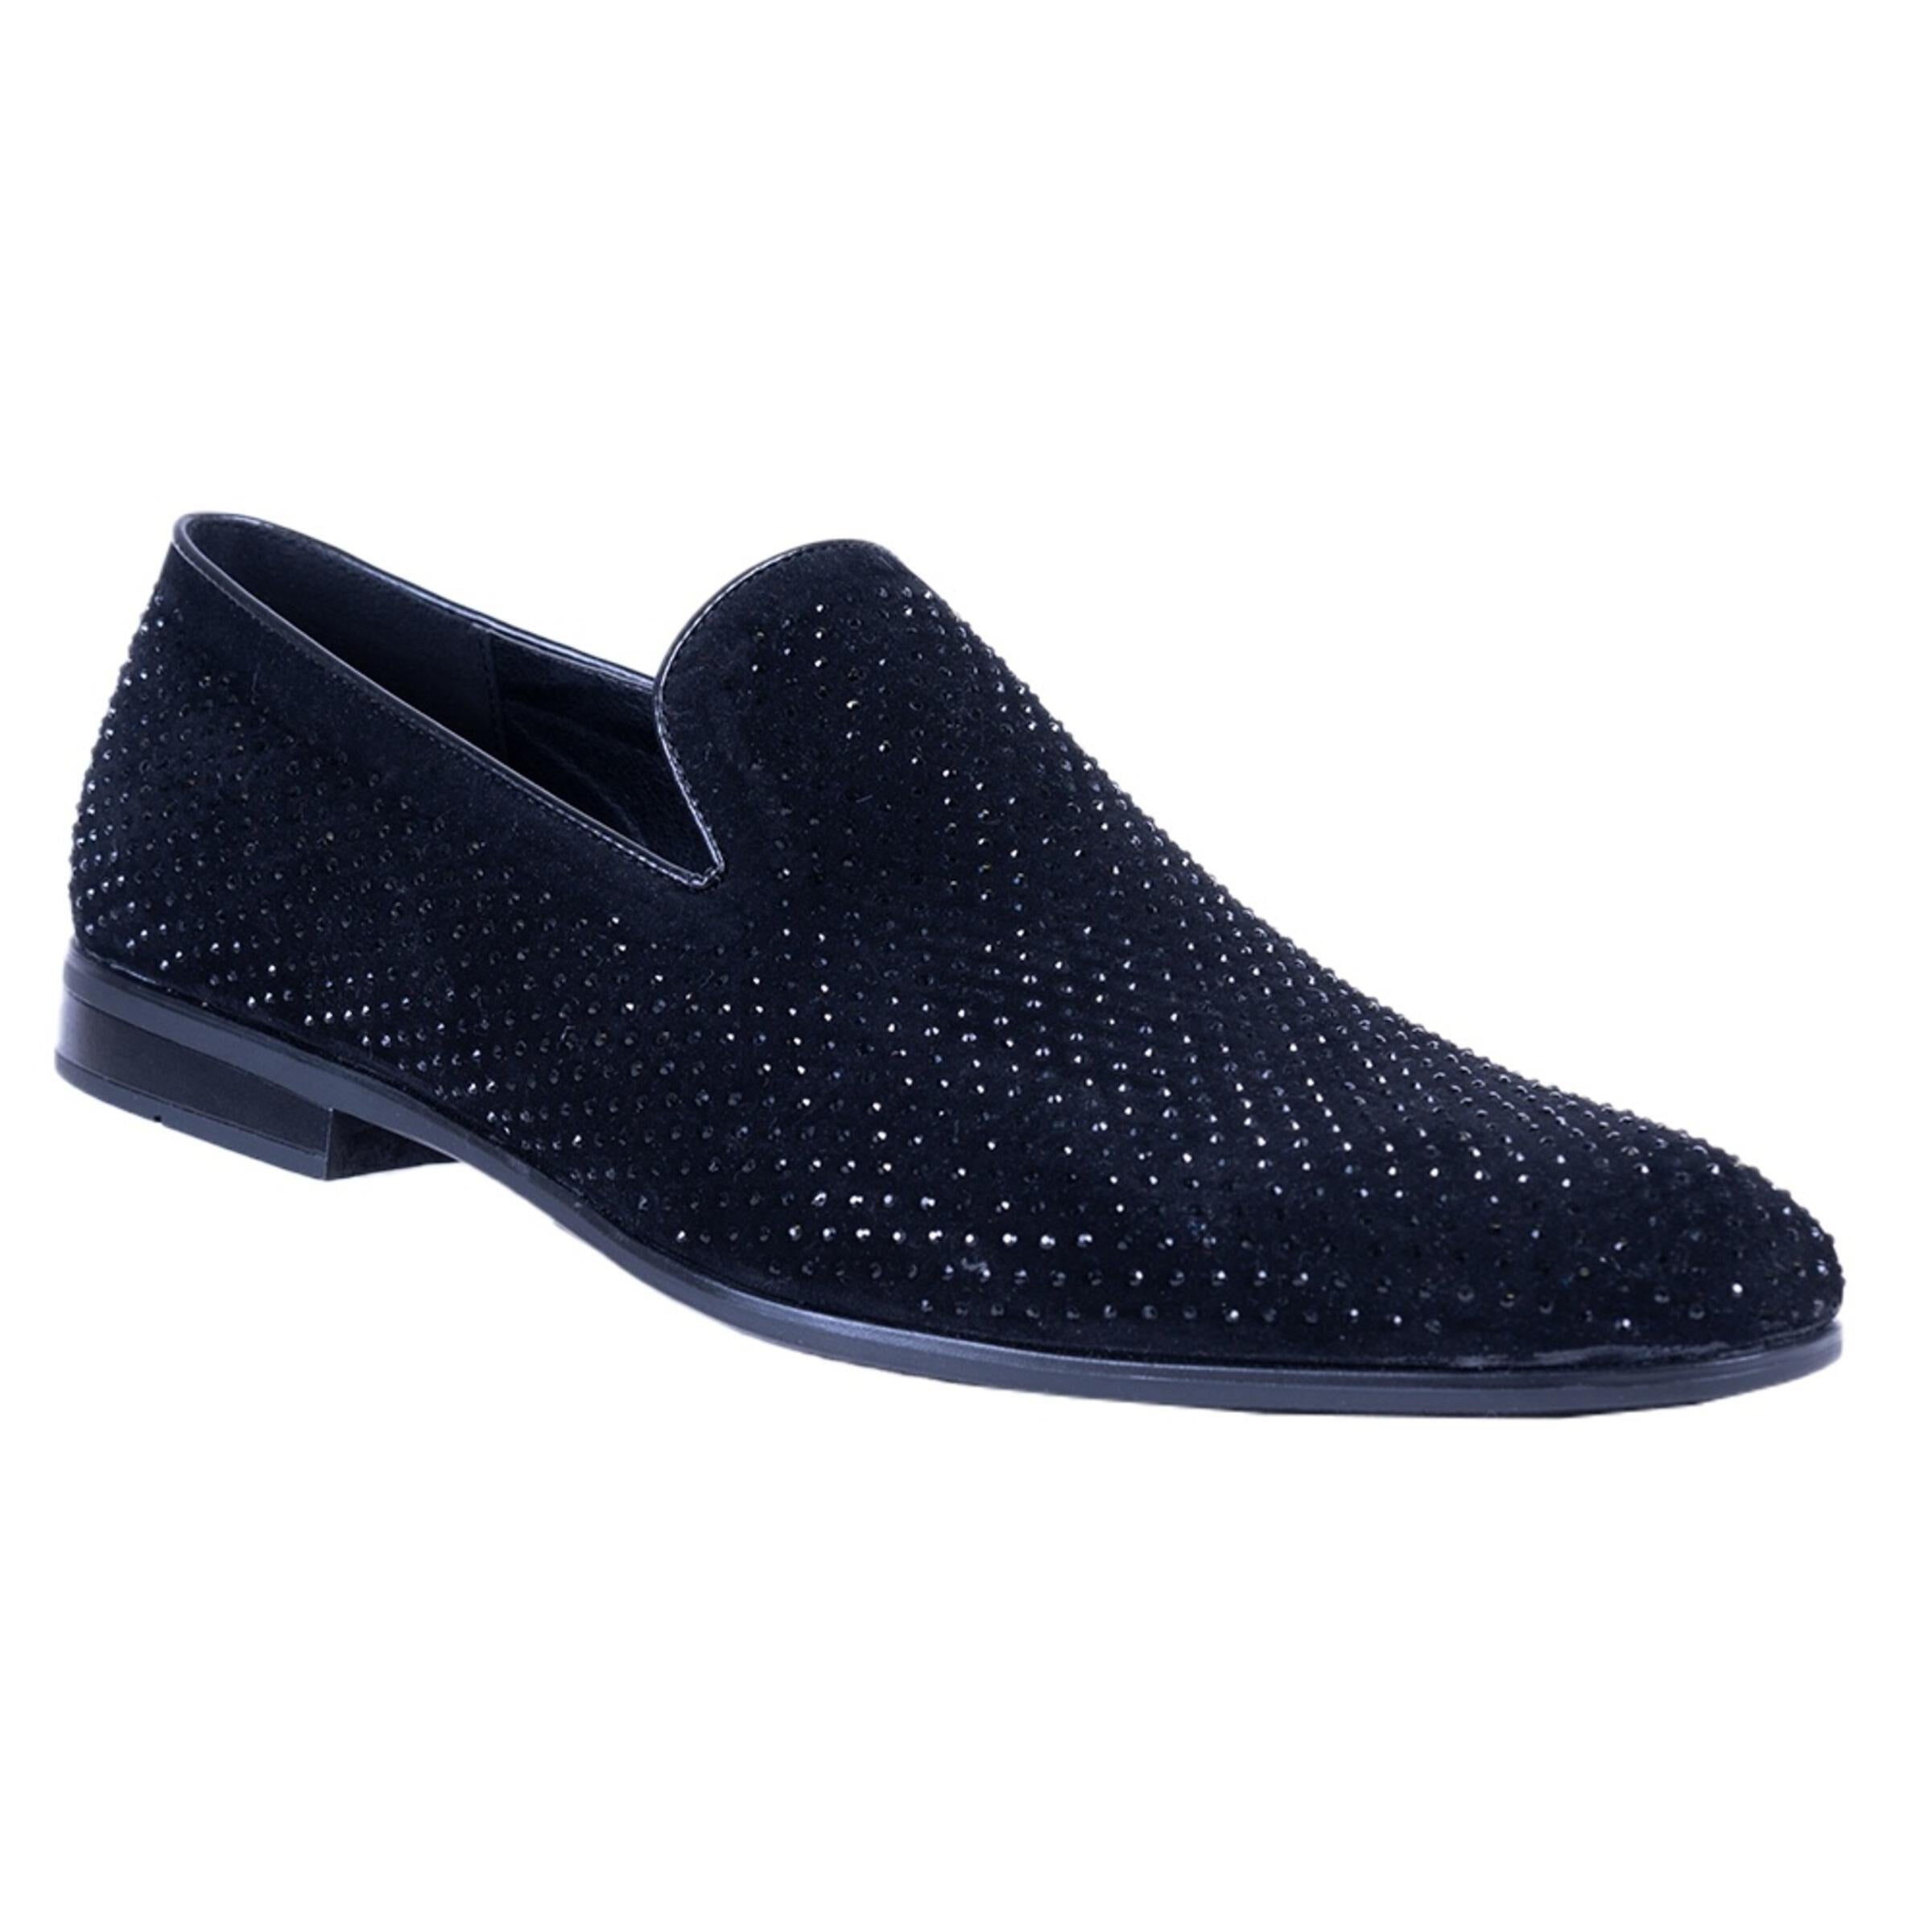 Romario Dress Shoes - 5641 - Black